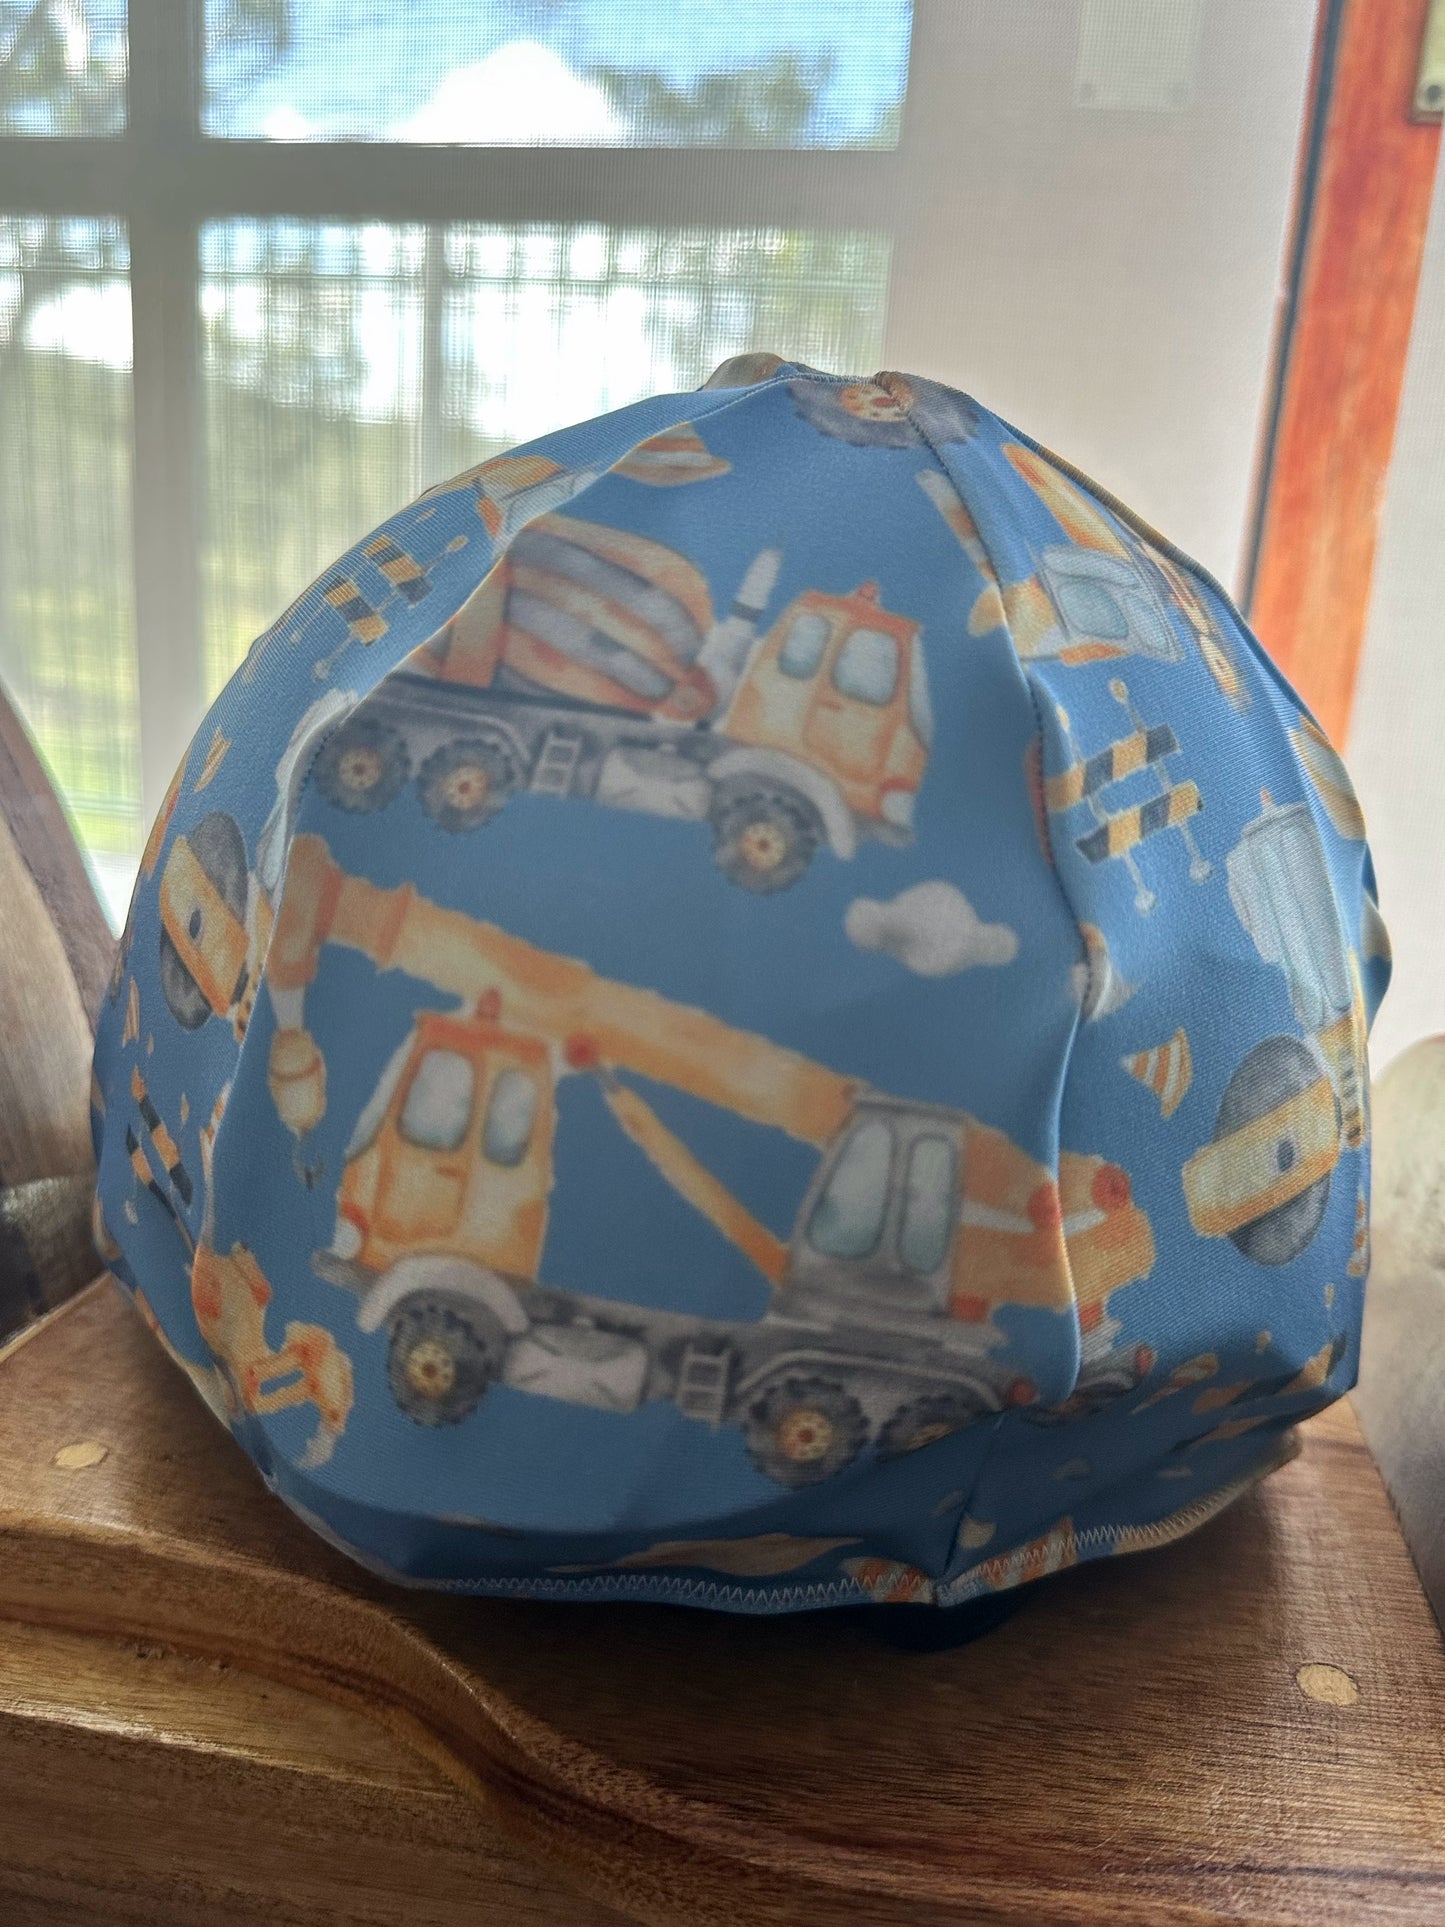 Construction Time Kids Helmet Cover